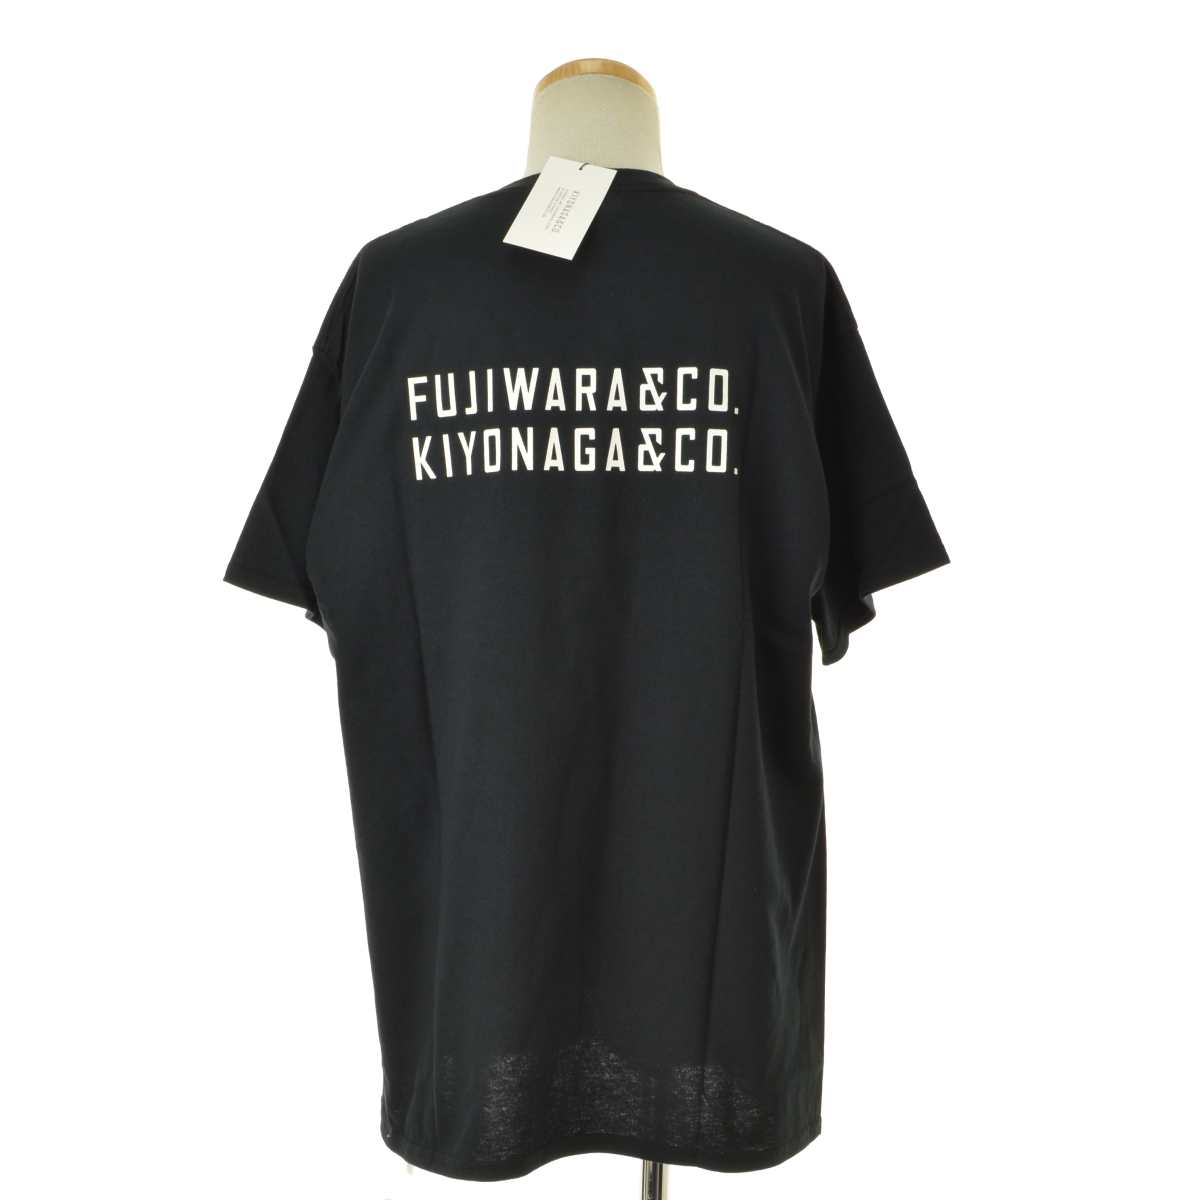 Mサイズ黒 FUJIWARA&CO. BACK tee Tシャツ www.krzysztofbialy.com